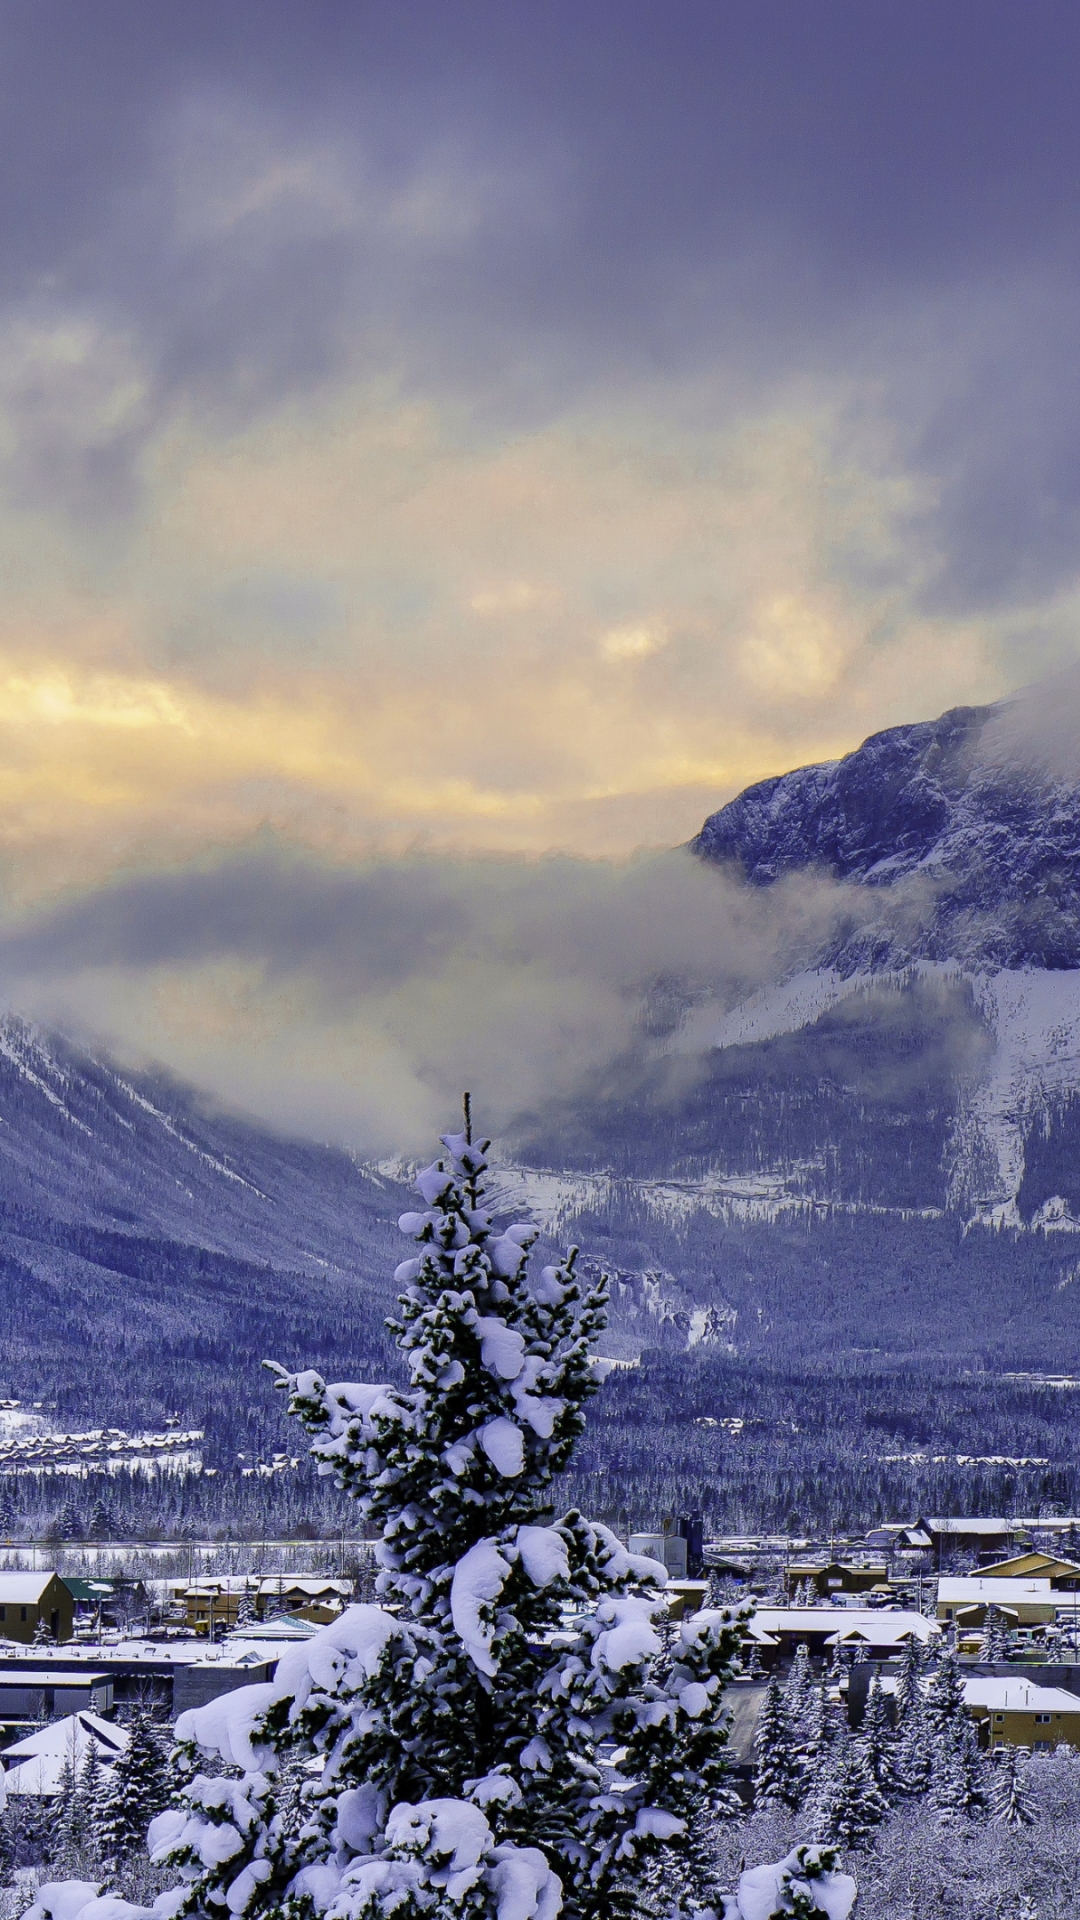 Banff National Park in Alberta, Canada in Winter